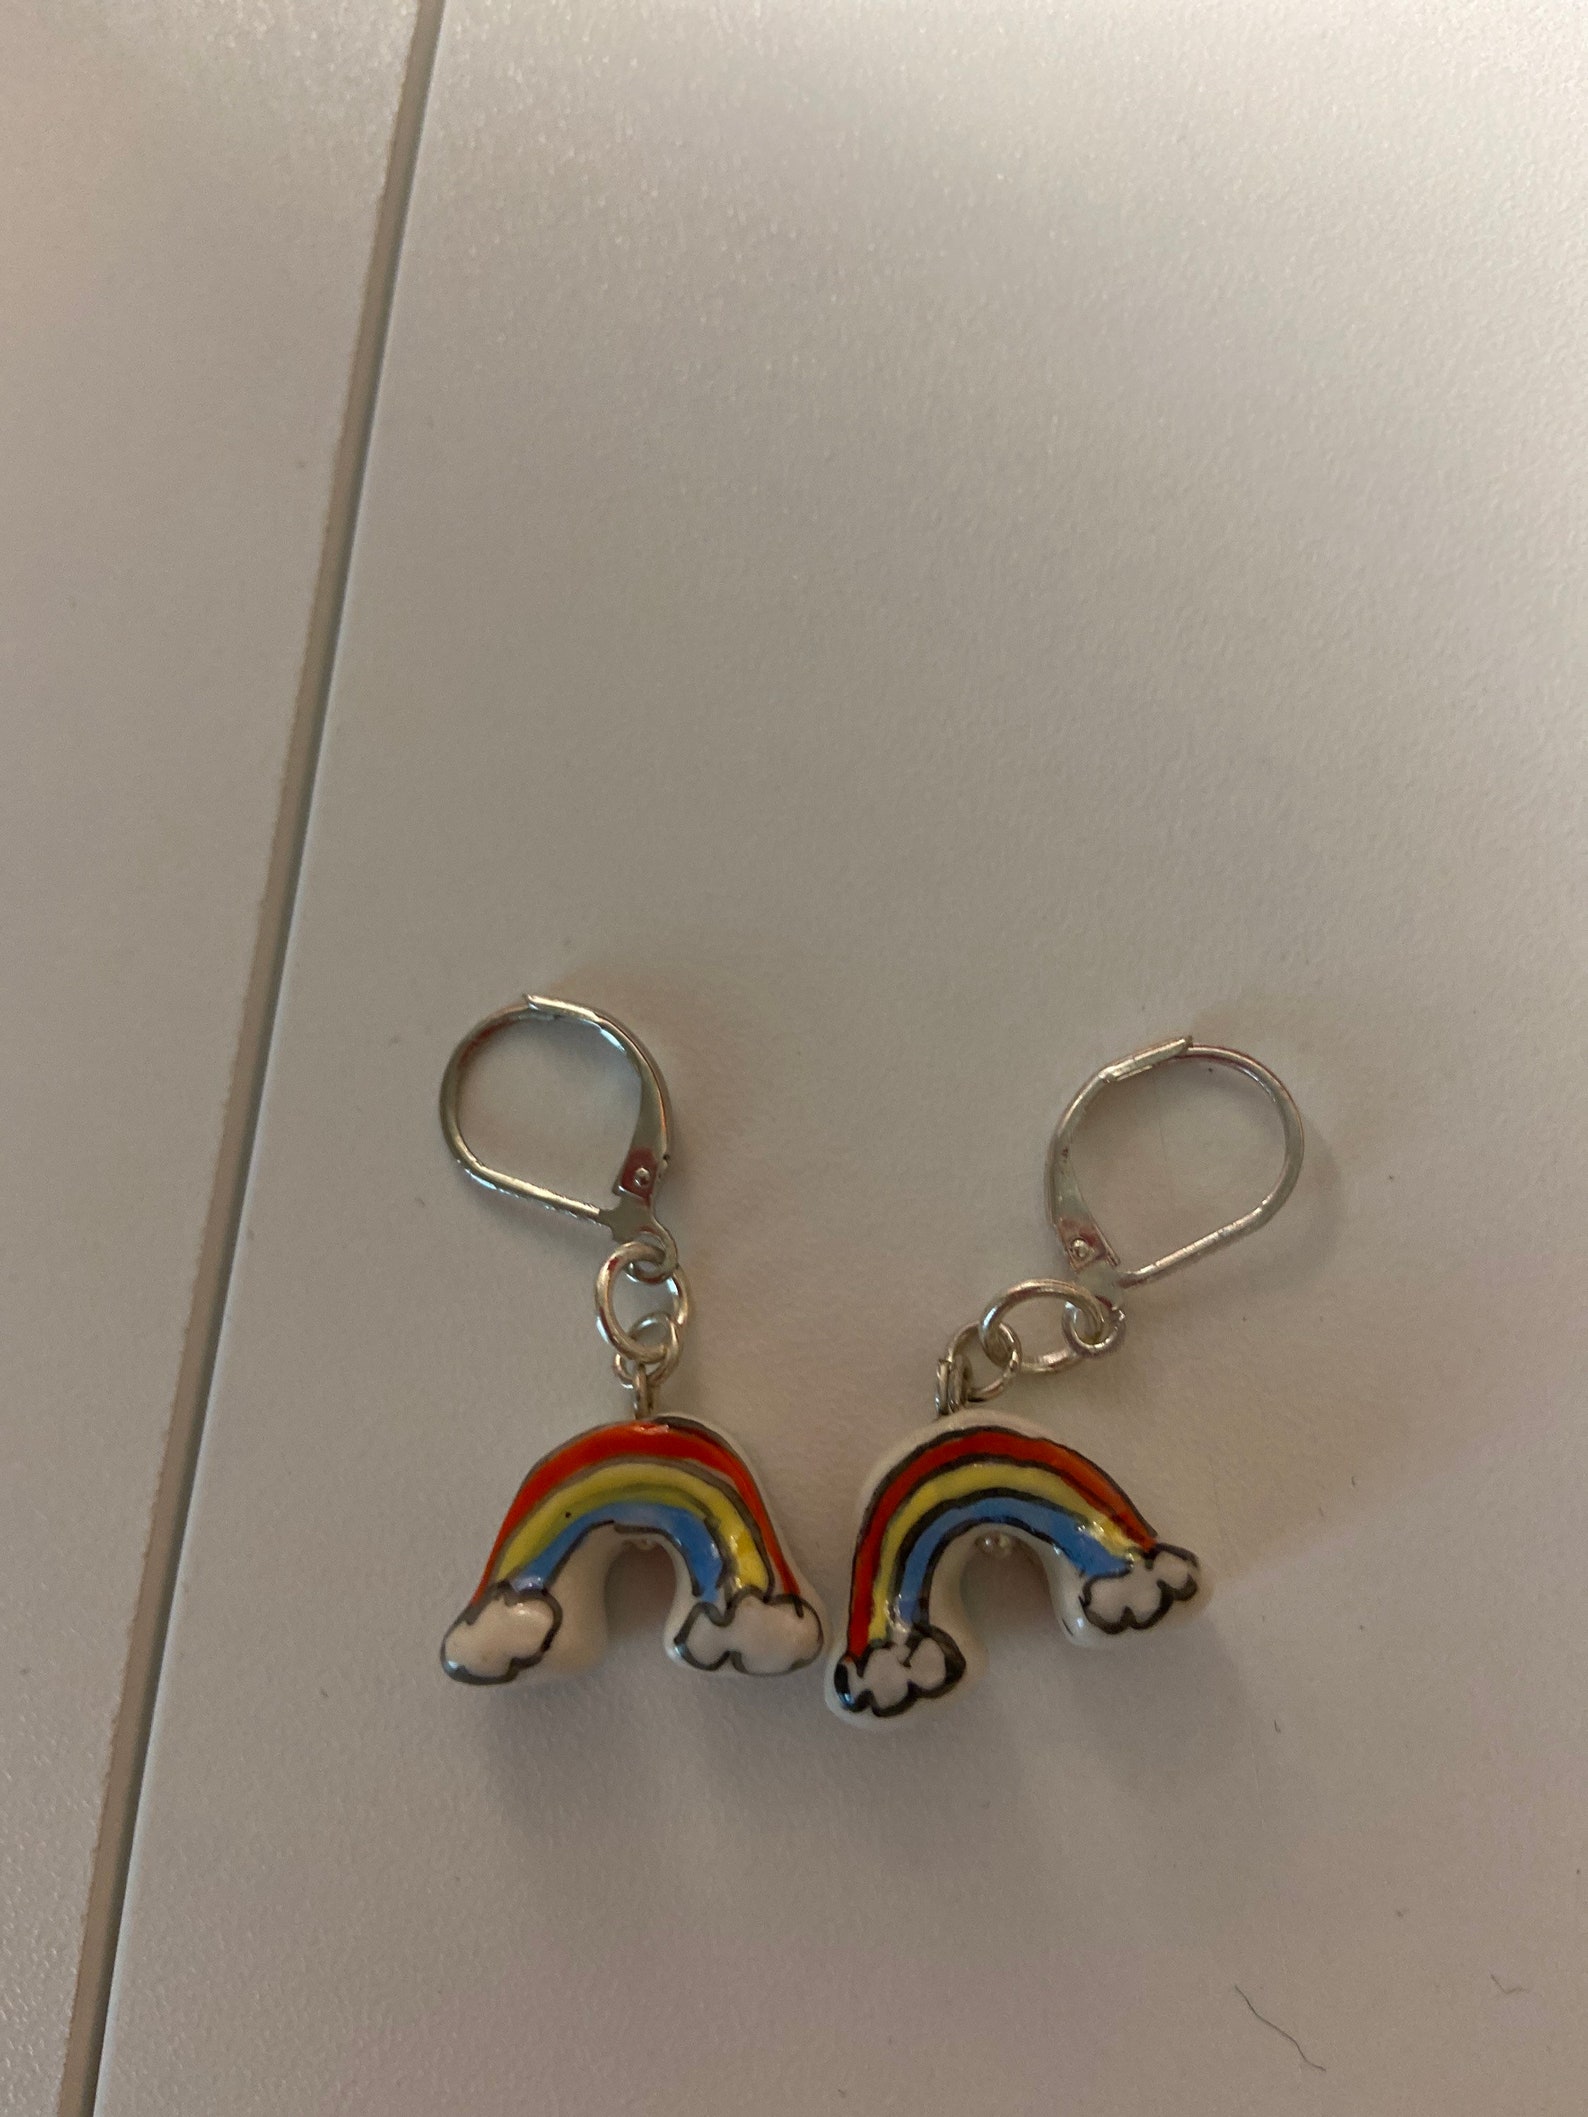 Rainbow earrings | Etsy